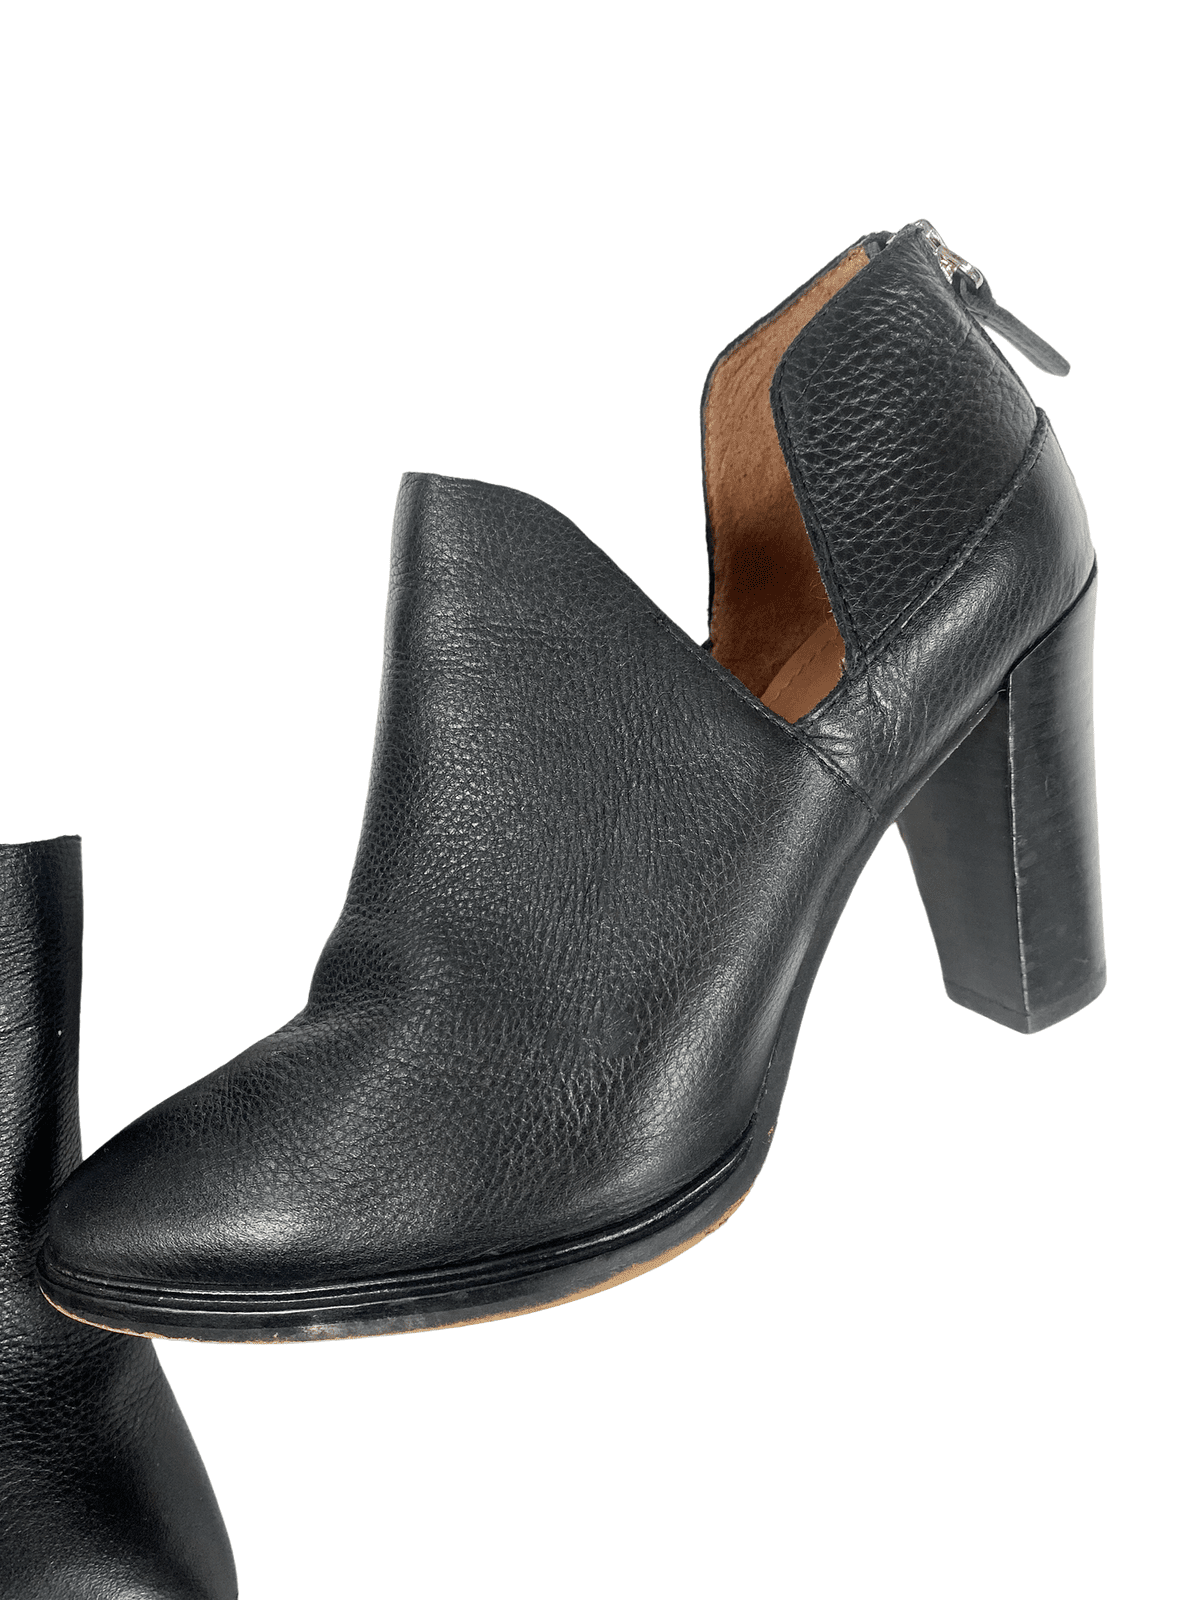 Alias Mae leather cut out boots | size 8 or EU 39